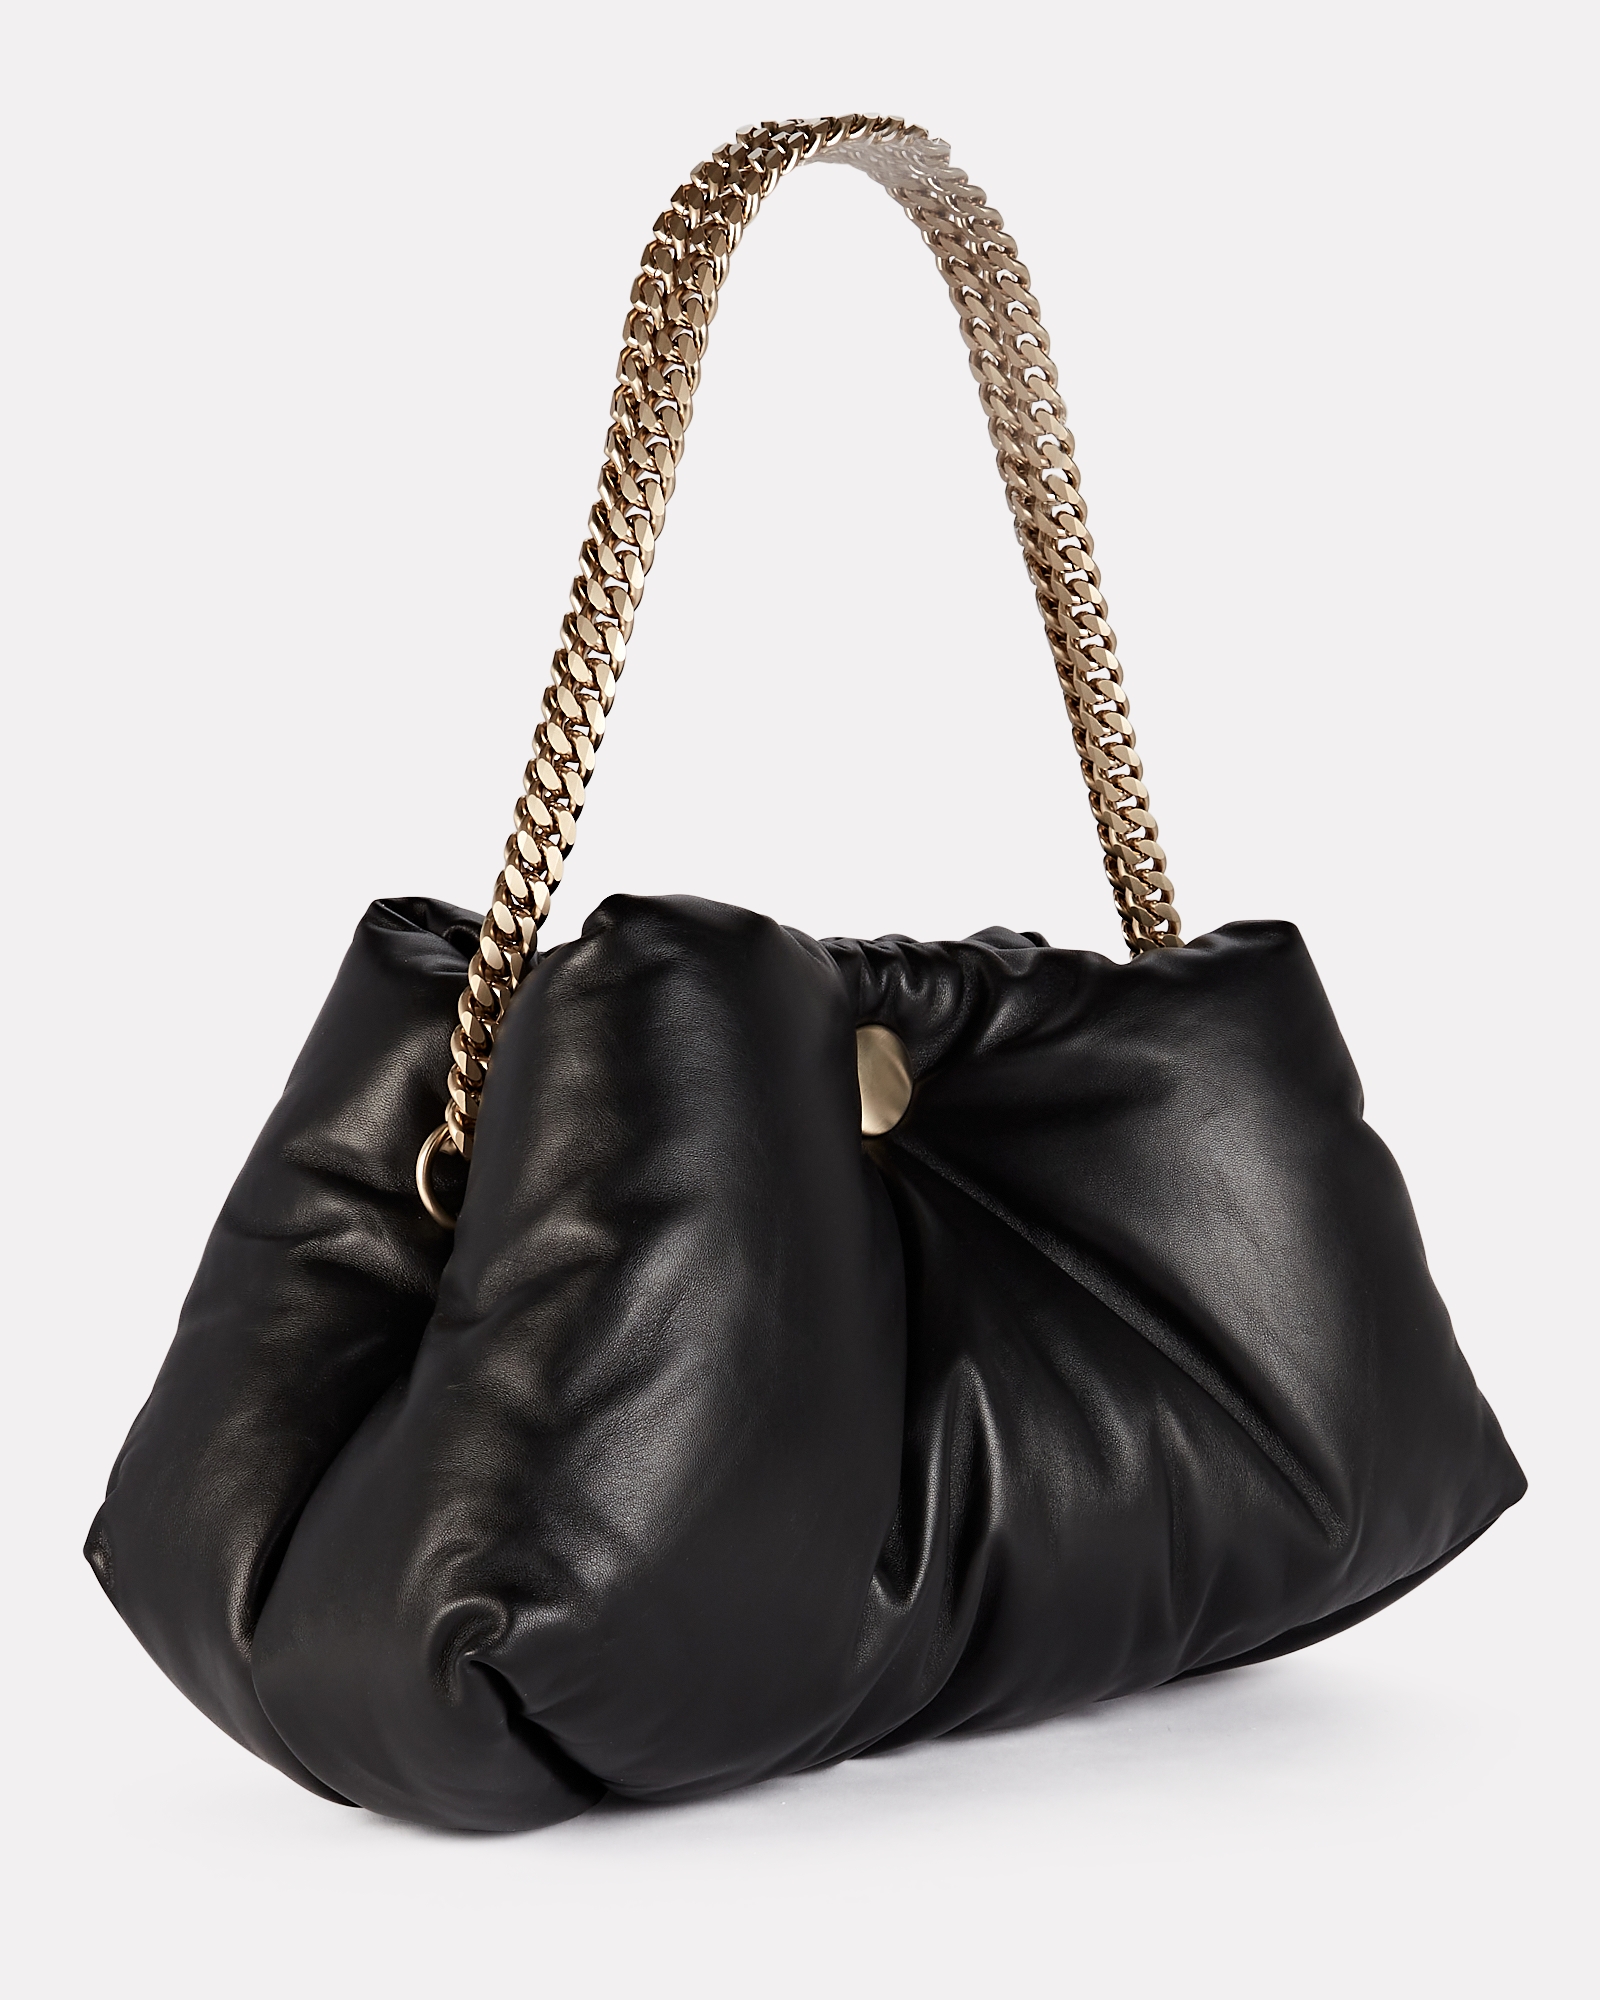 Proenza Schouler Tobo Leather Puffy Chain Bag | INTERMIX®